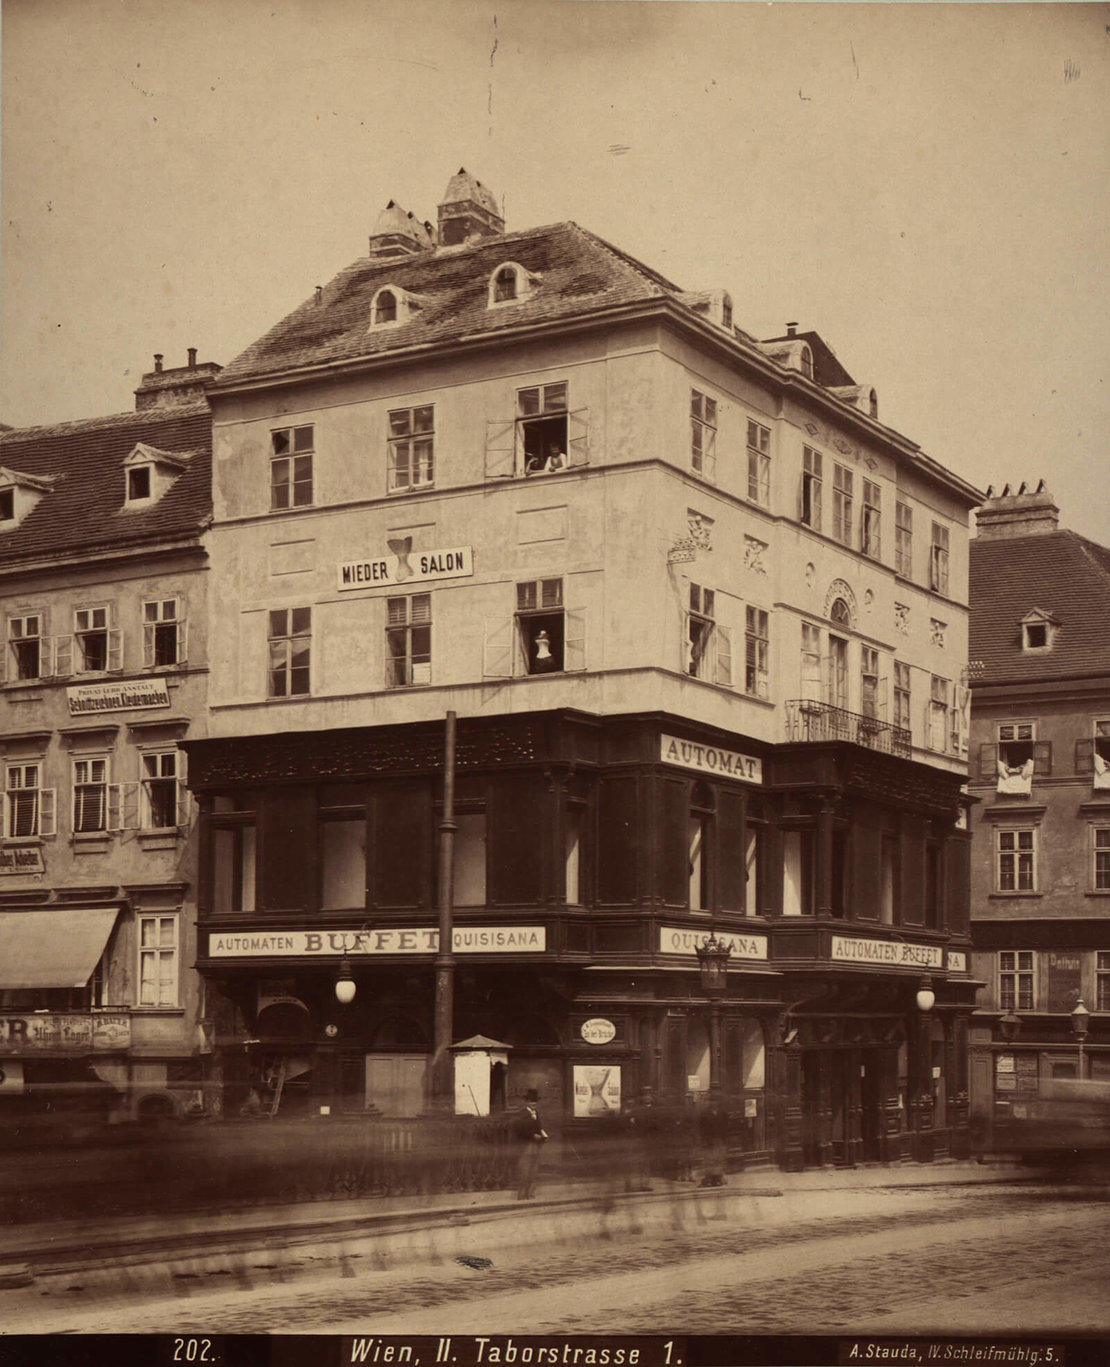 Automatenbuffet Quisisana, 2., Taborstraße 1, Foto: August Stauda, um 1898, Wien Museum, Inv.-Nr. 24145 